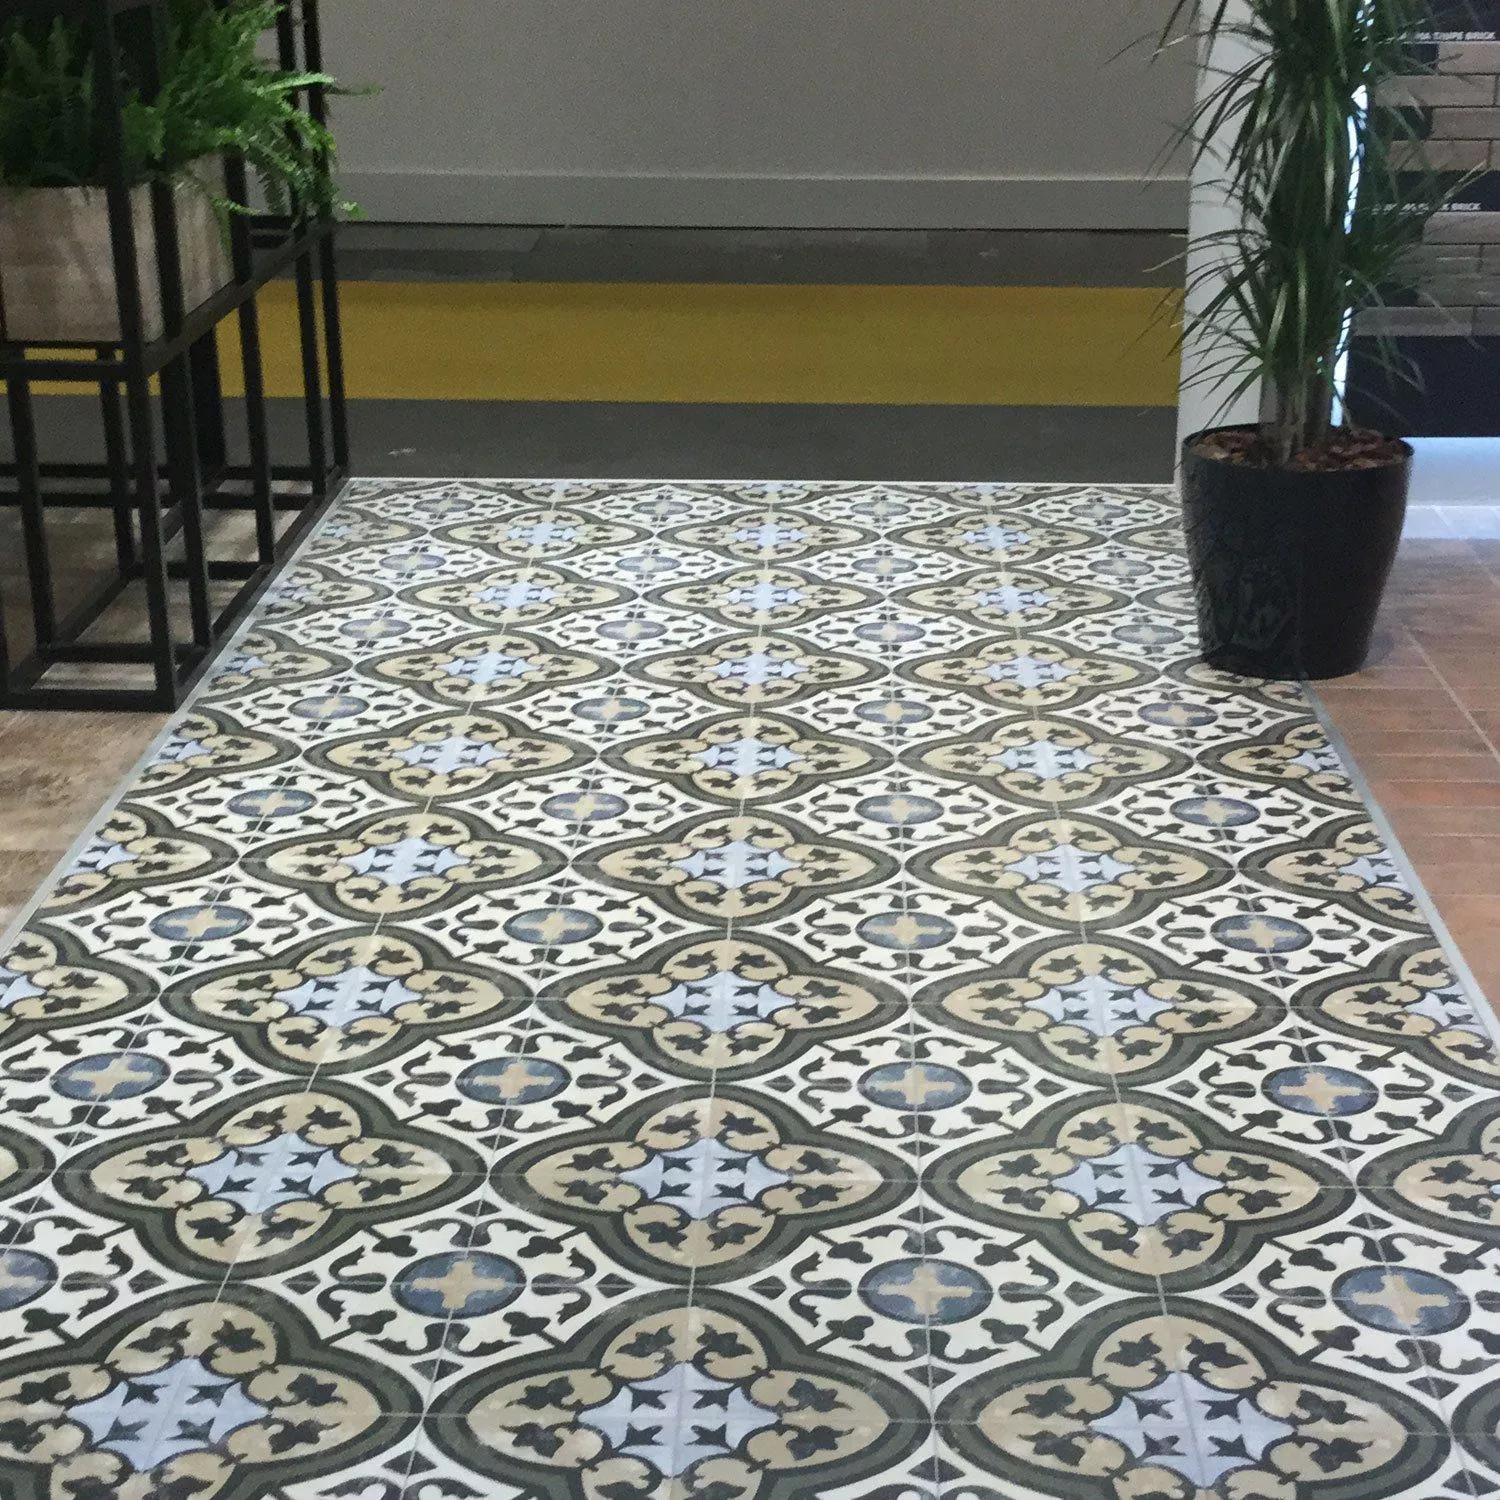 Sample Cement Tiles Optic Floor Tiles Decor Mexico Disierto